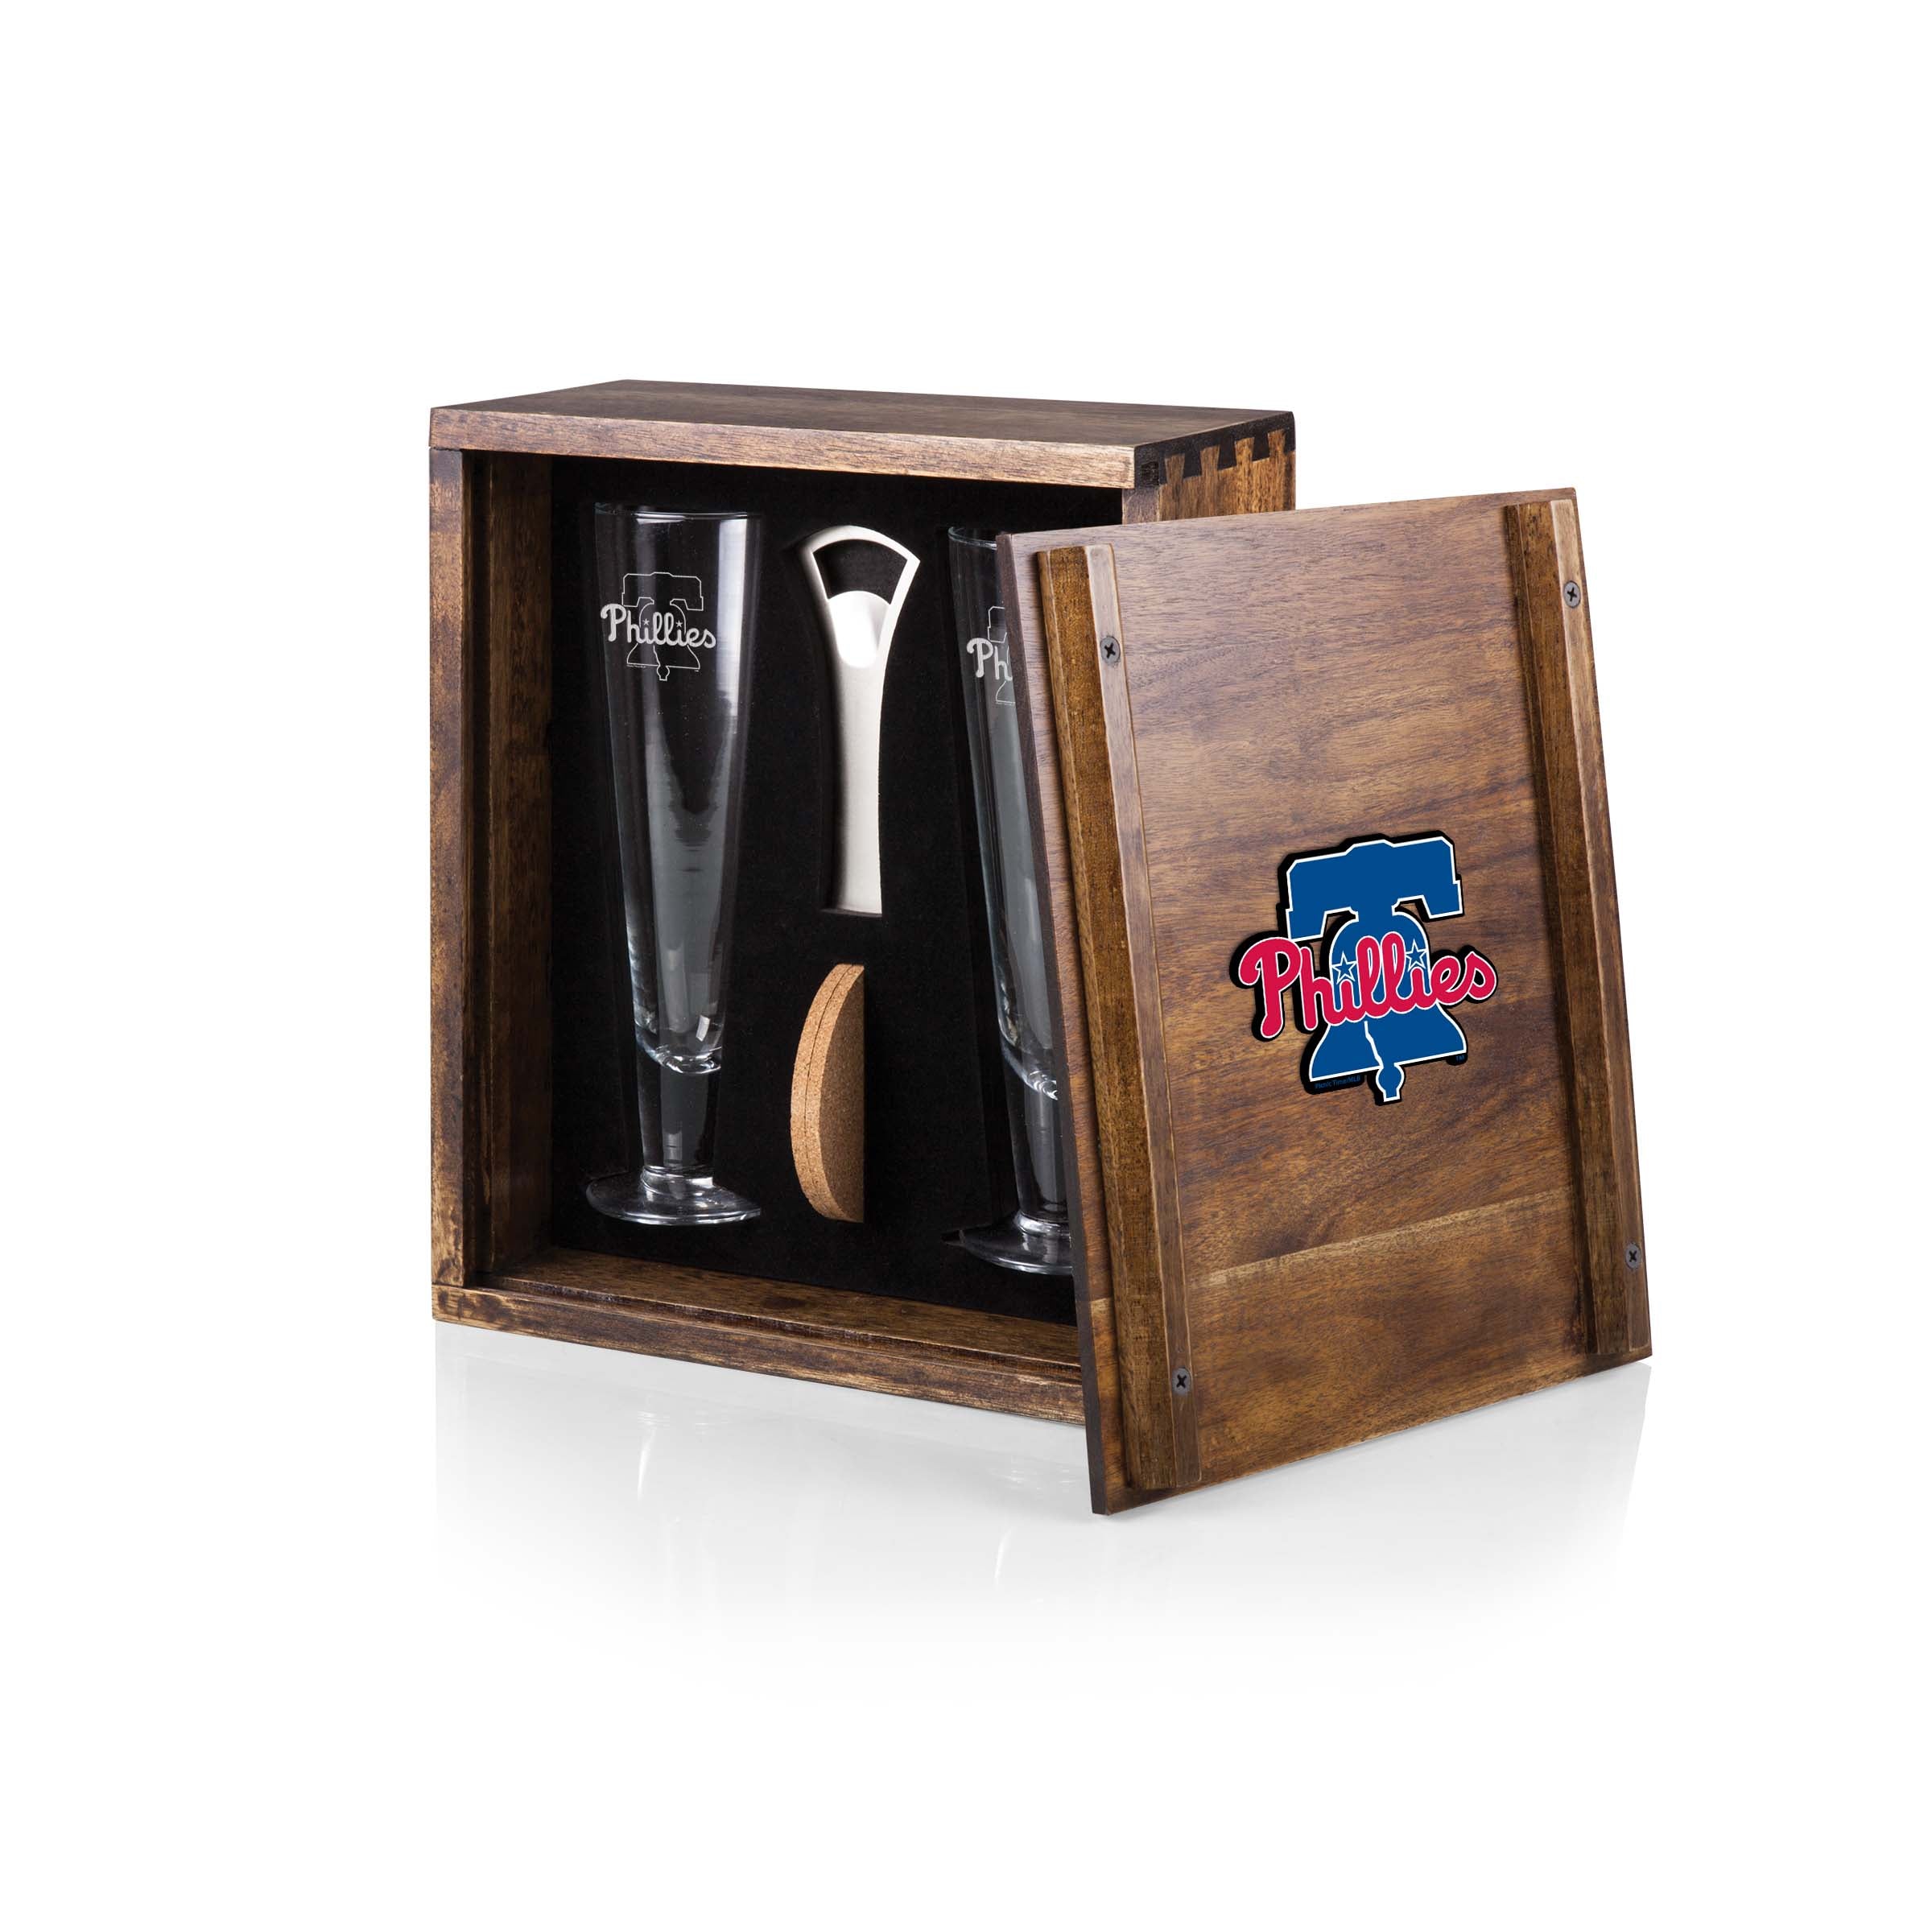 Philadelphia Phillies - Pilsner Beer Glass Gift Set